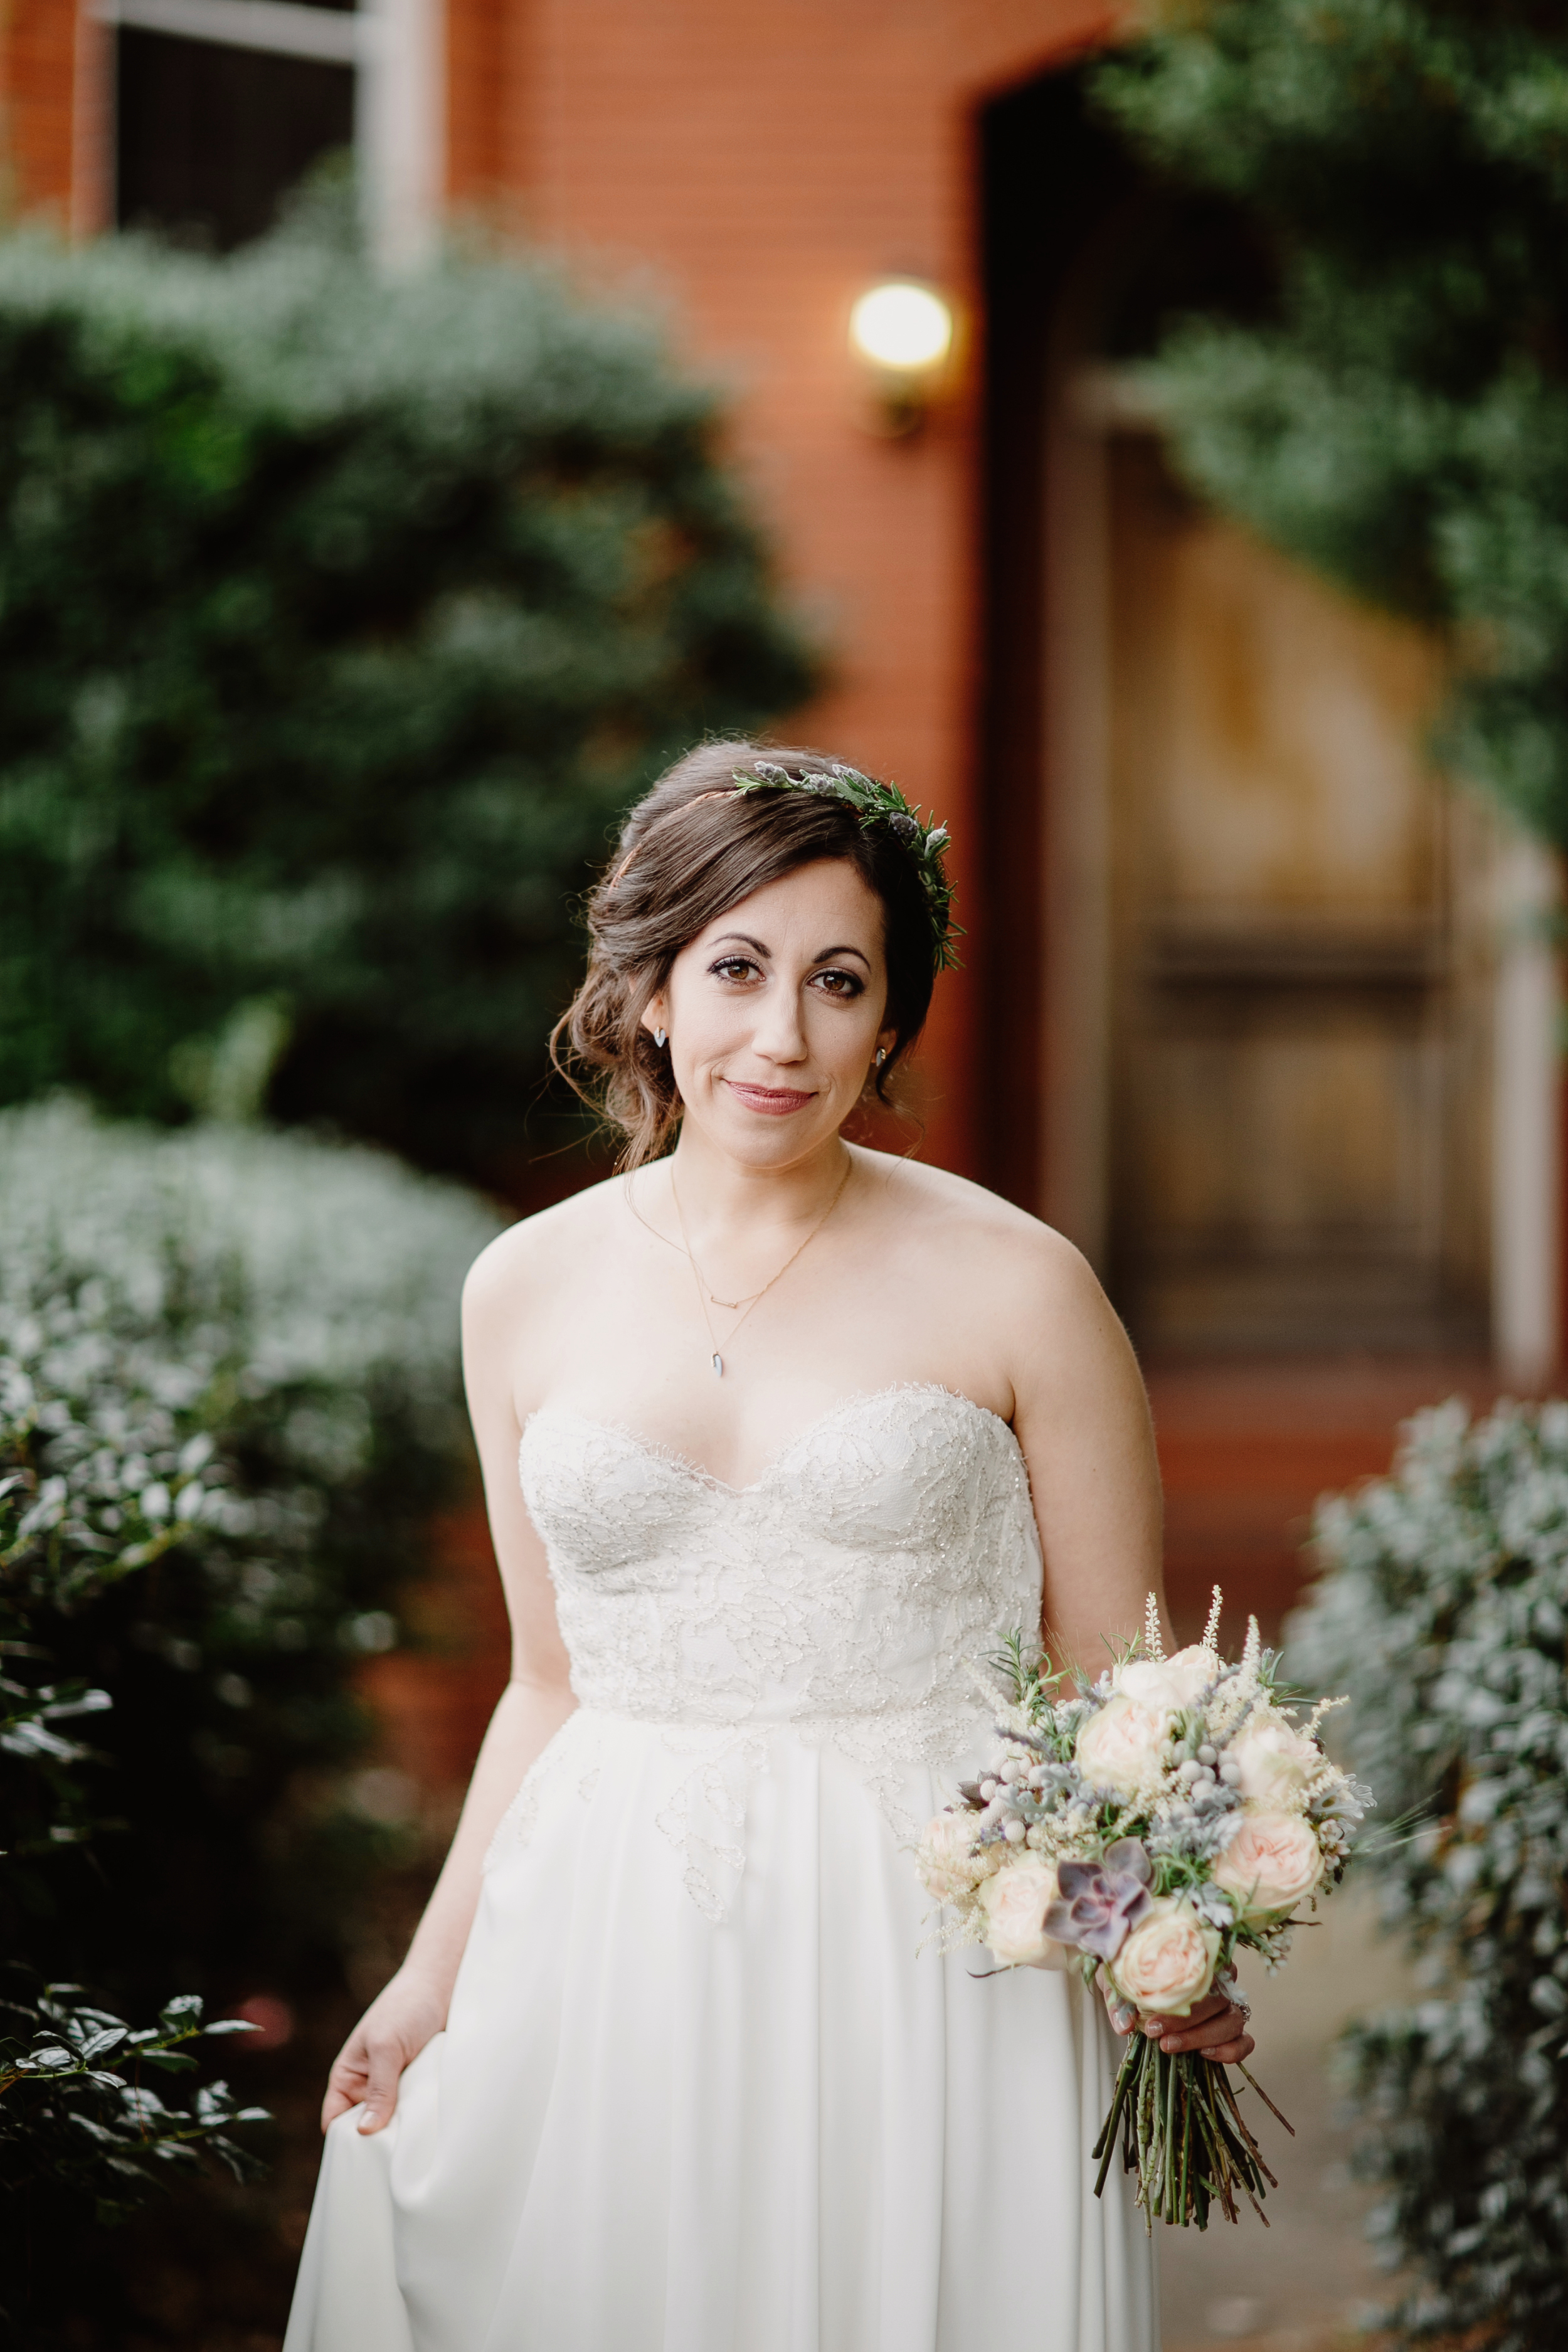 Cordelle Bride // Neutral and lavender wedding flowers